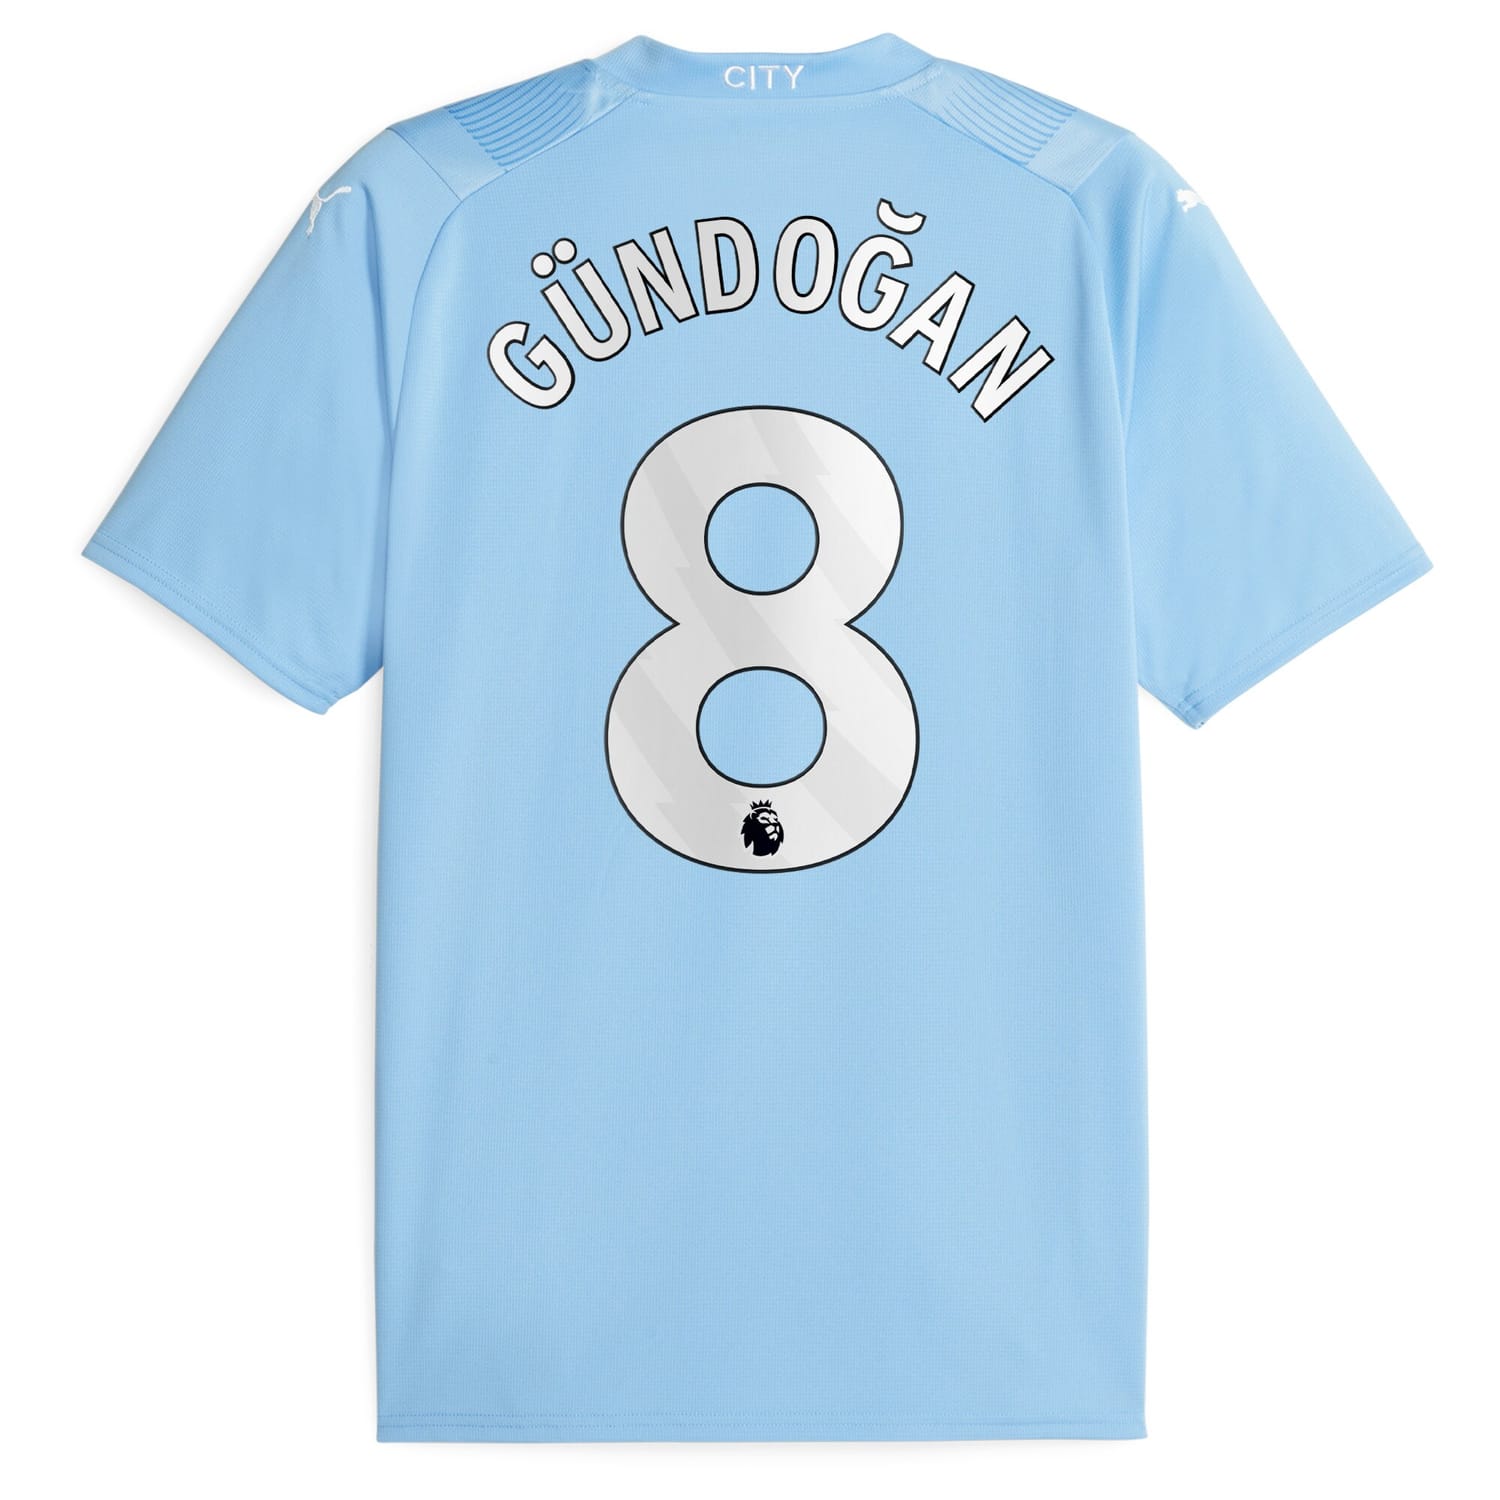 Premier League Manchester City Home Jersey Shirt 2023-24 player Ilkay Gündogan 8 printing for Men